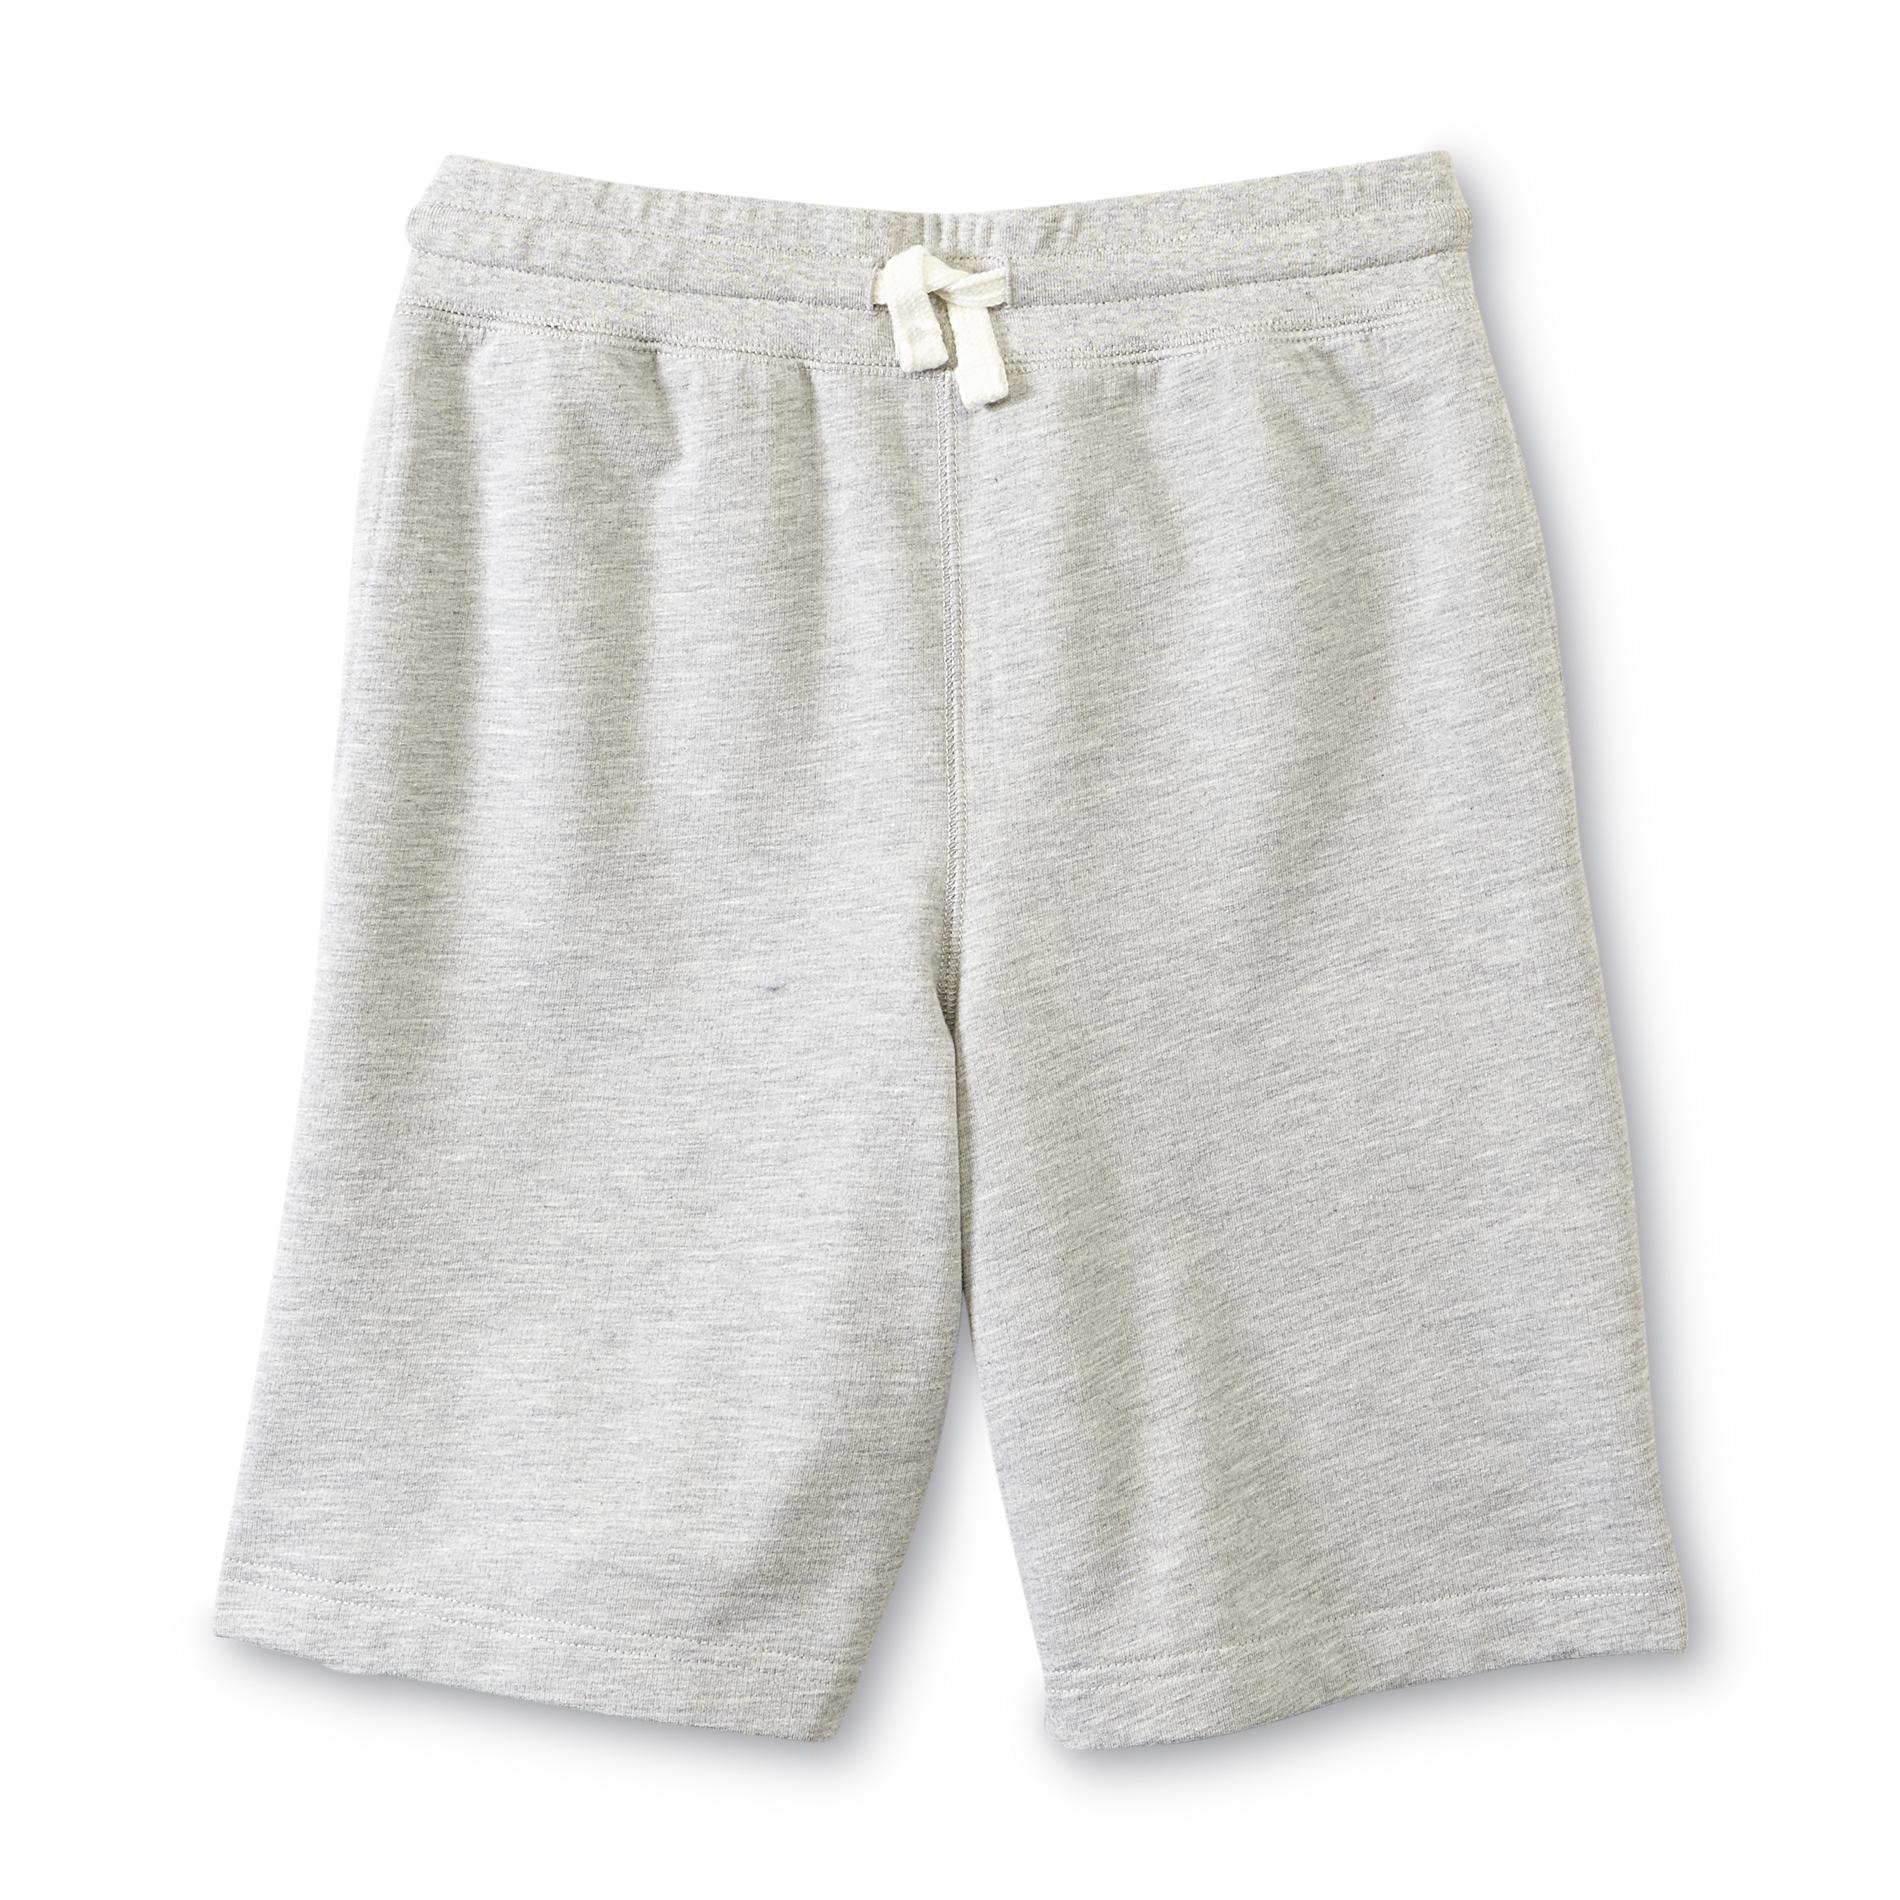 Basic Editions Boy's Knit Shorts